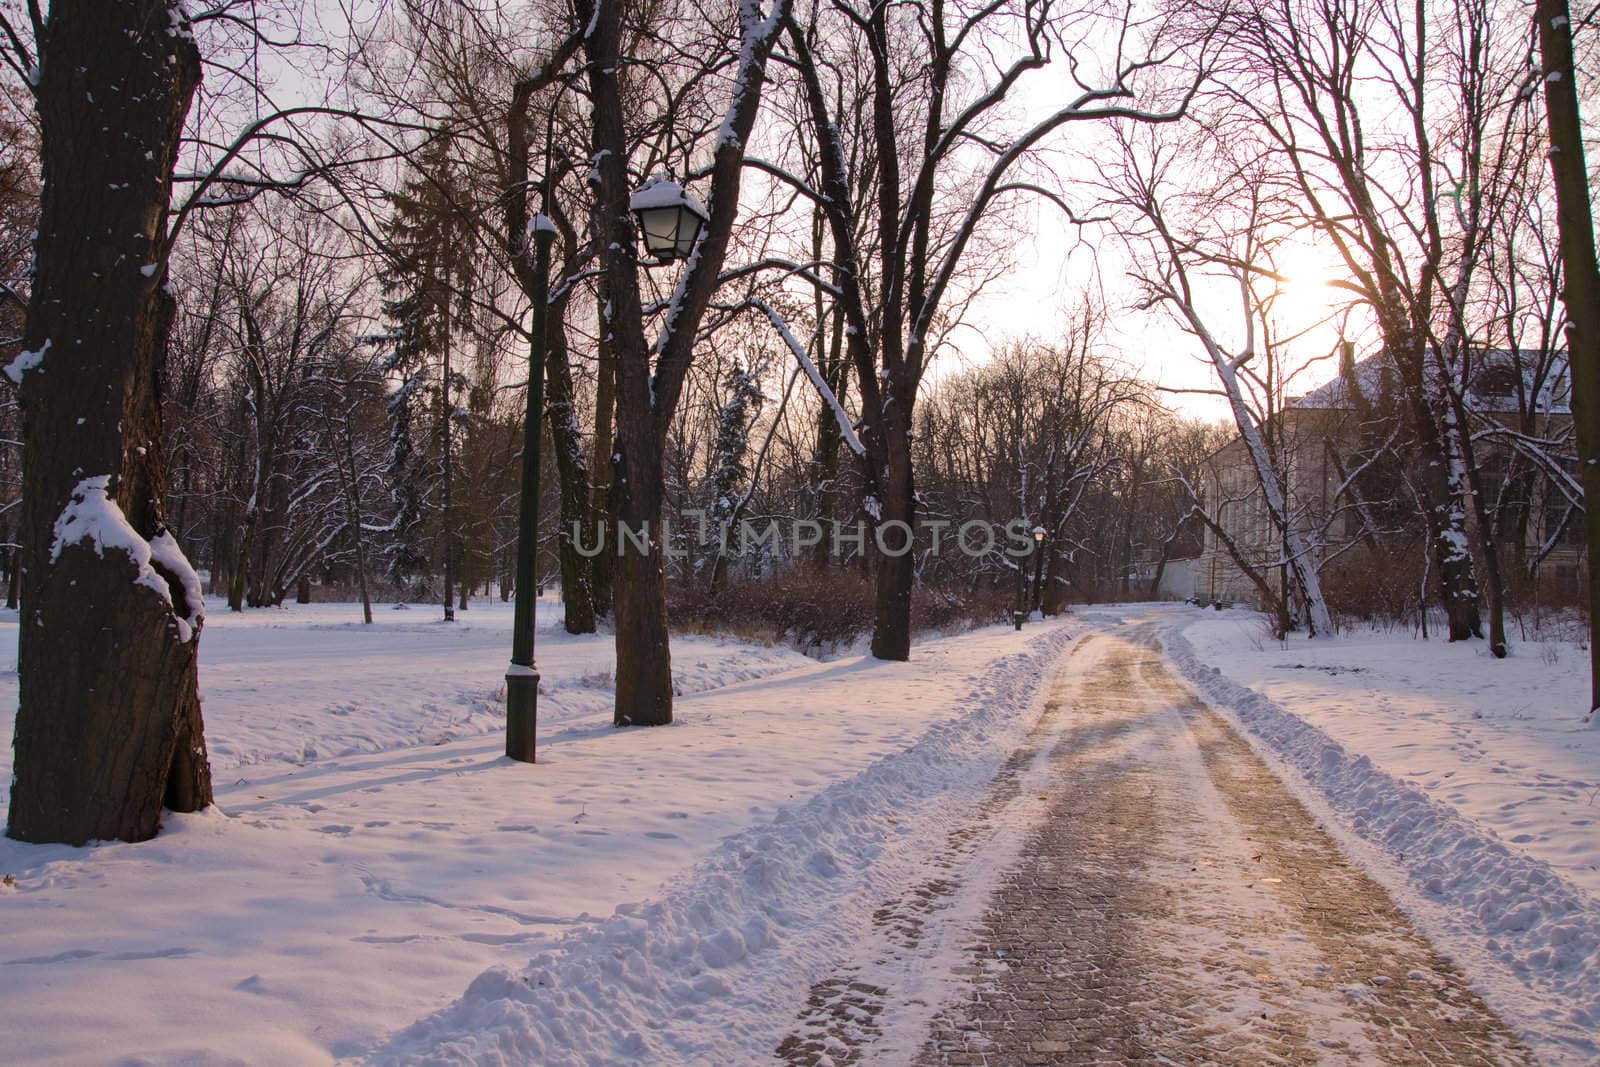 Snowy Warsaw park